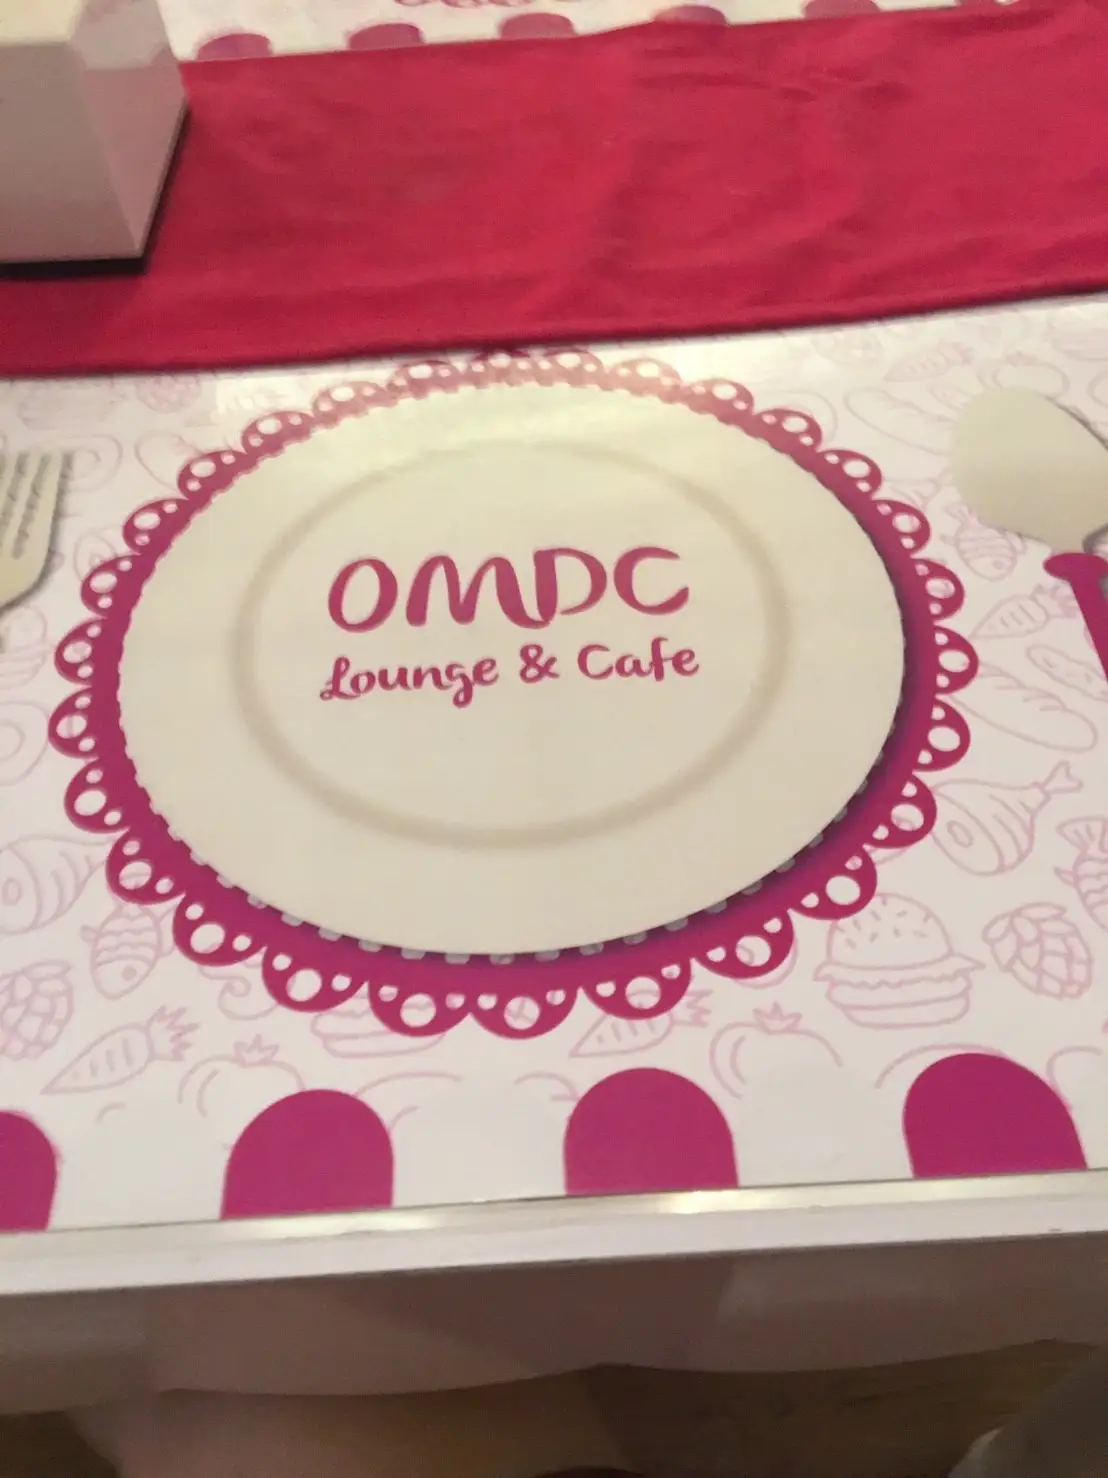 OMDC Lounge & Cafe